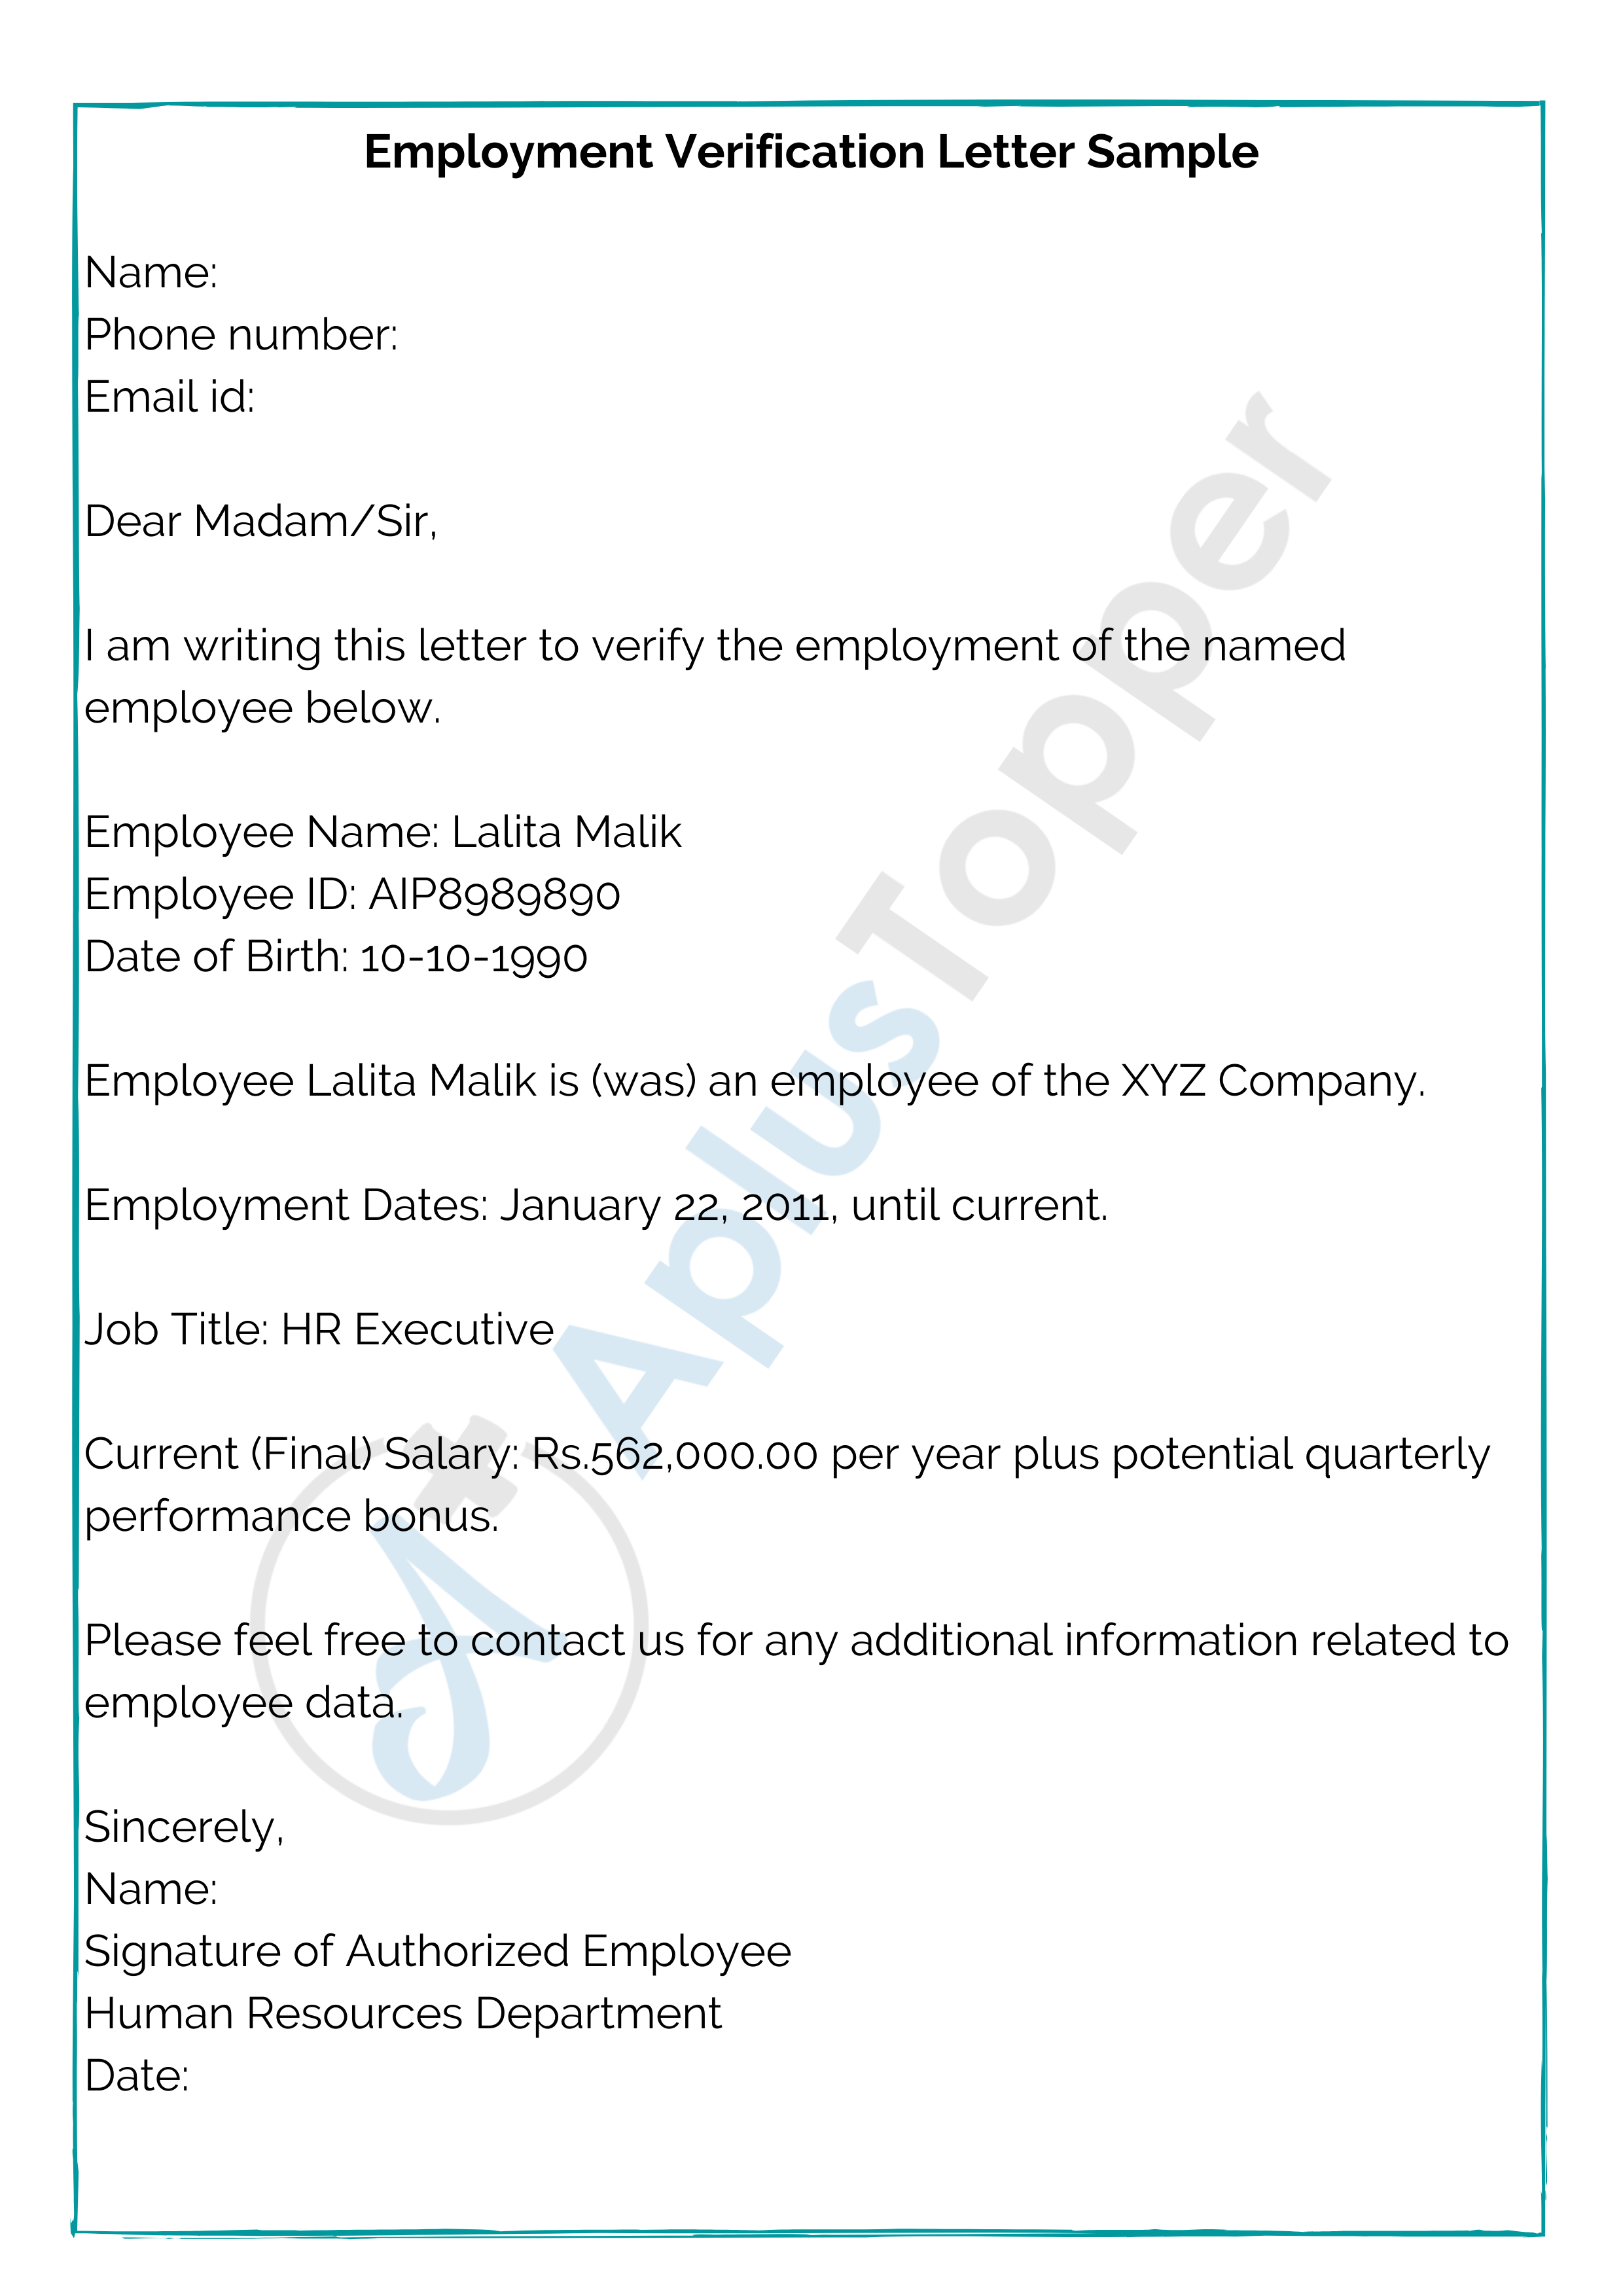 Employment Verification Letter Format Sample And Need Of Employment Verification Letter A Plus Topper